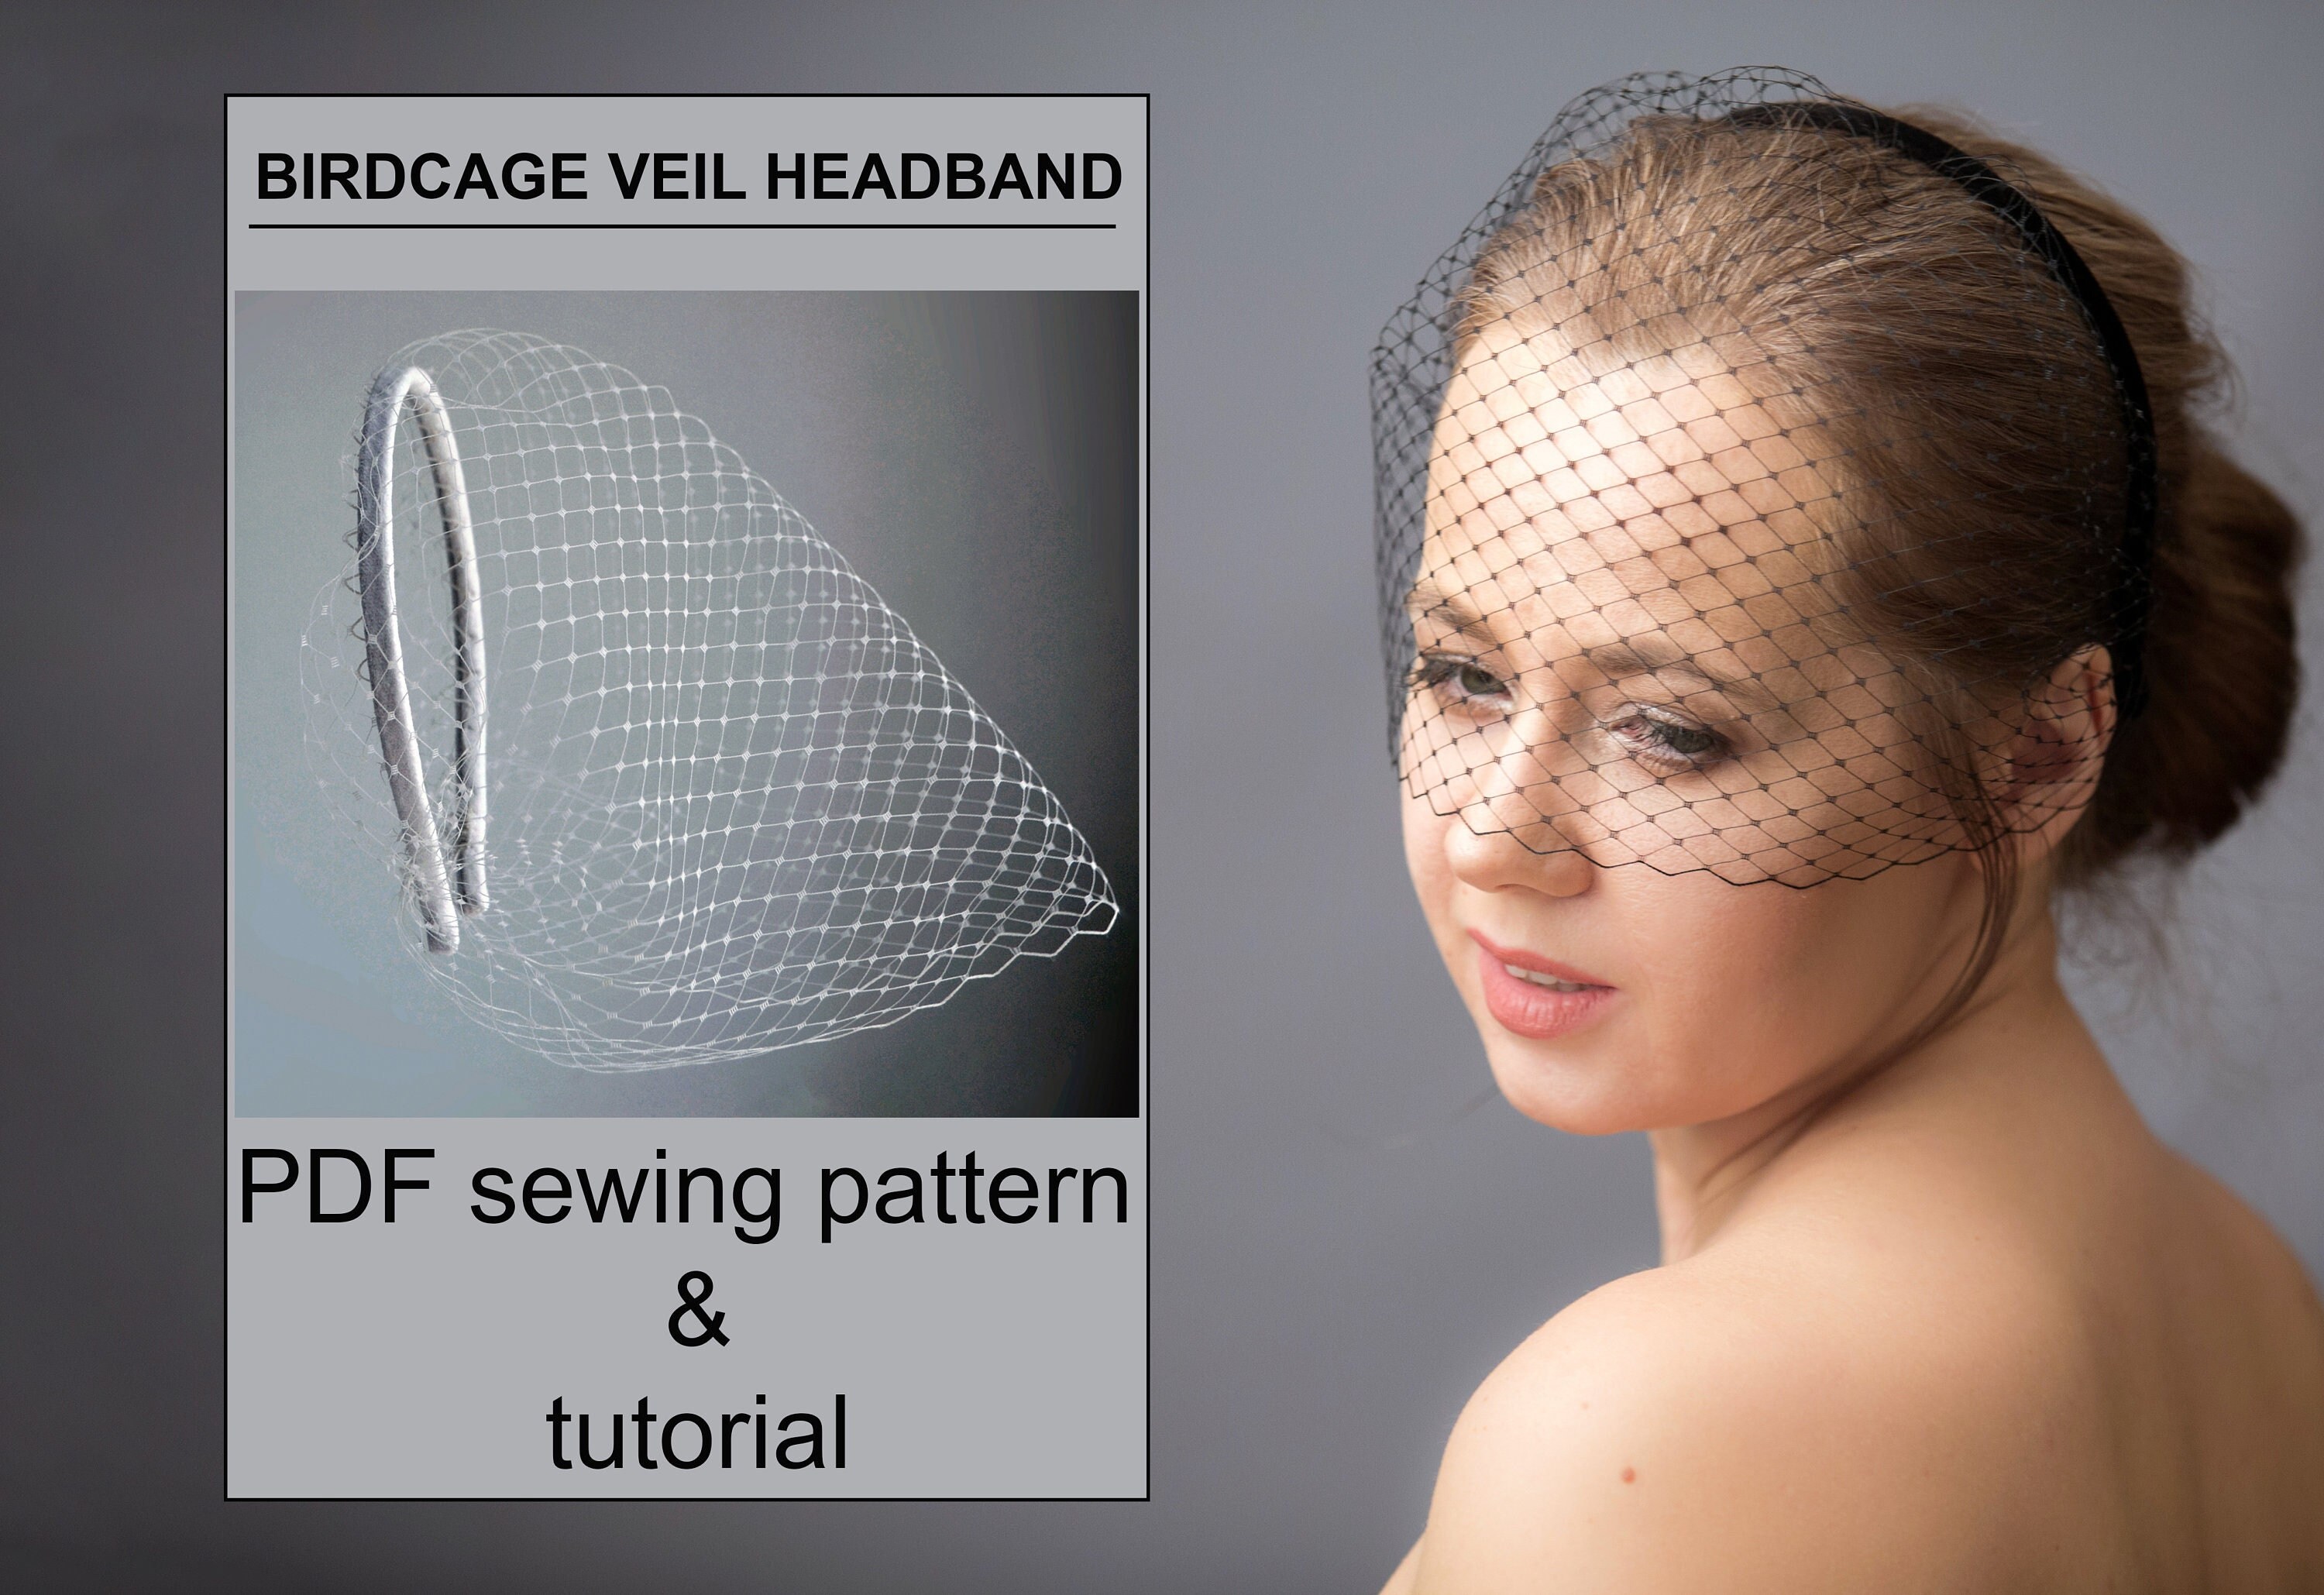 French netting Birdcage veil on a headband. – by Galinka